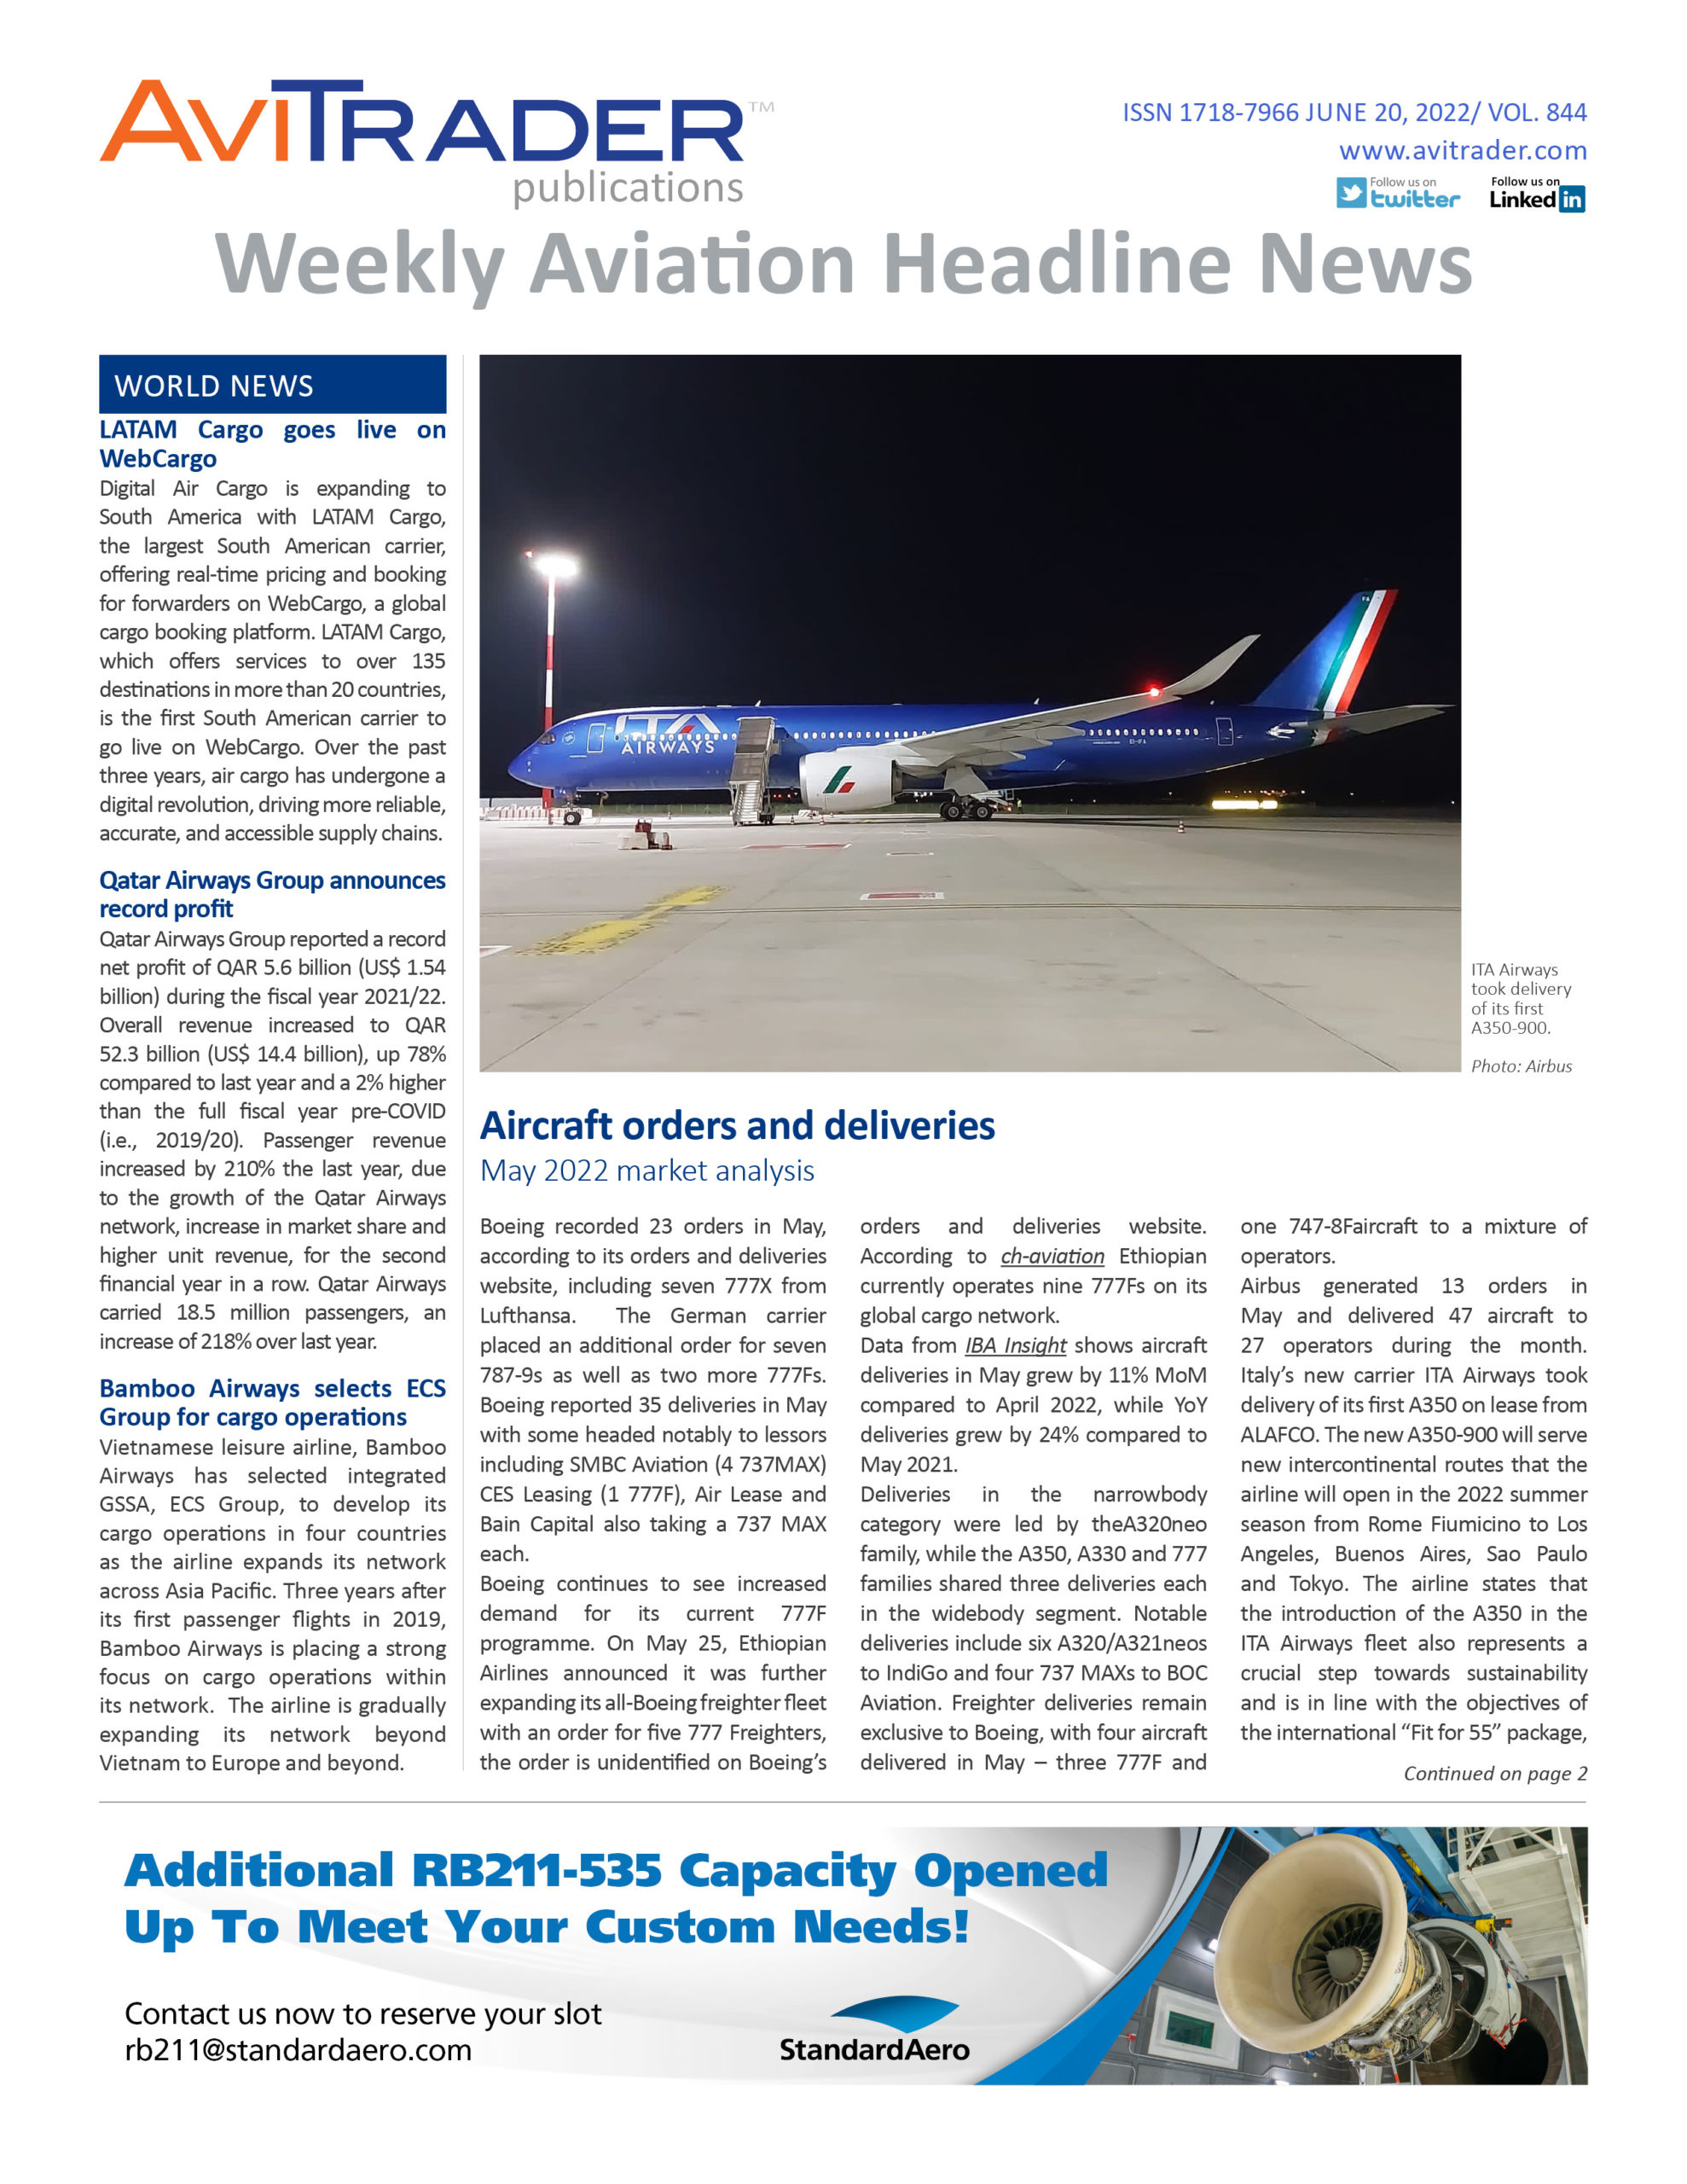 AviTrader_Weekly_Headline_News_Cover_2022-06-20